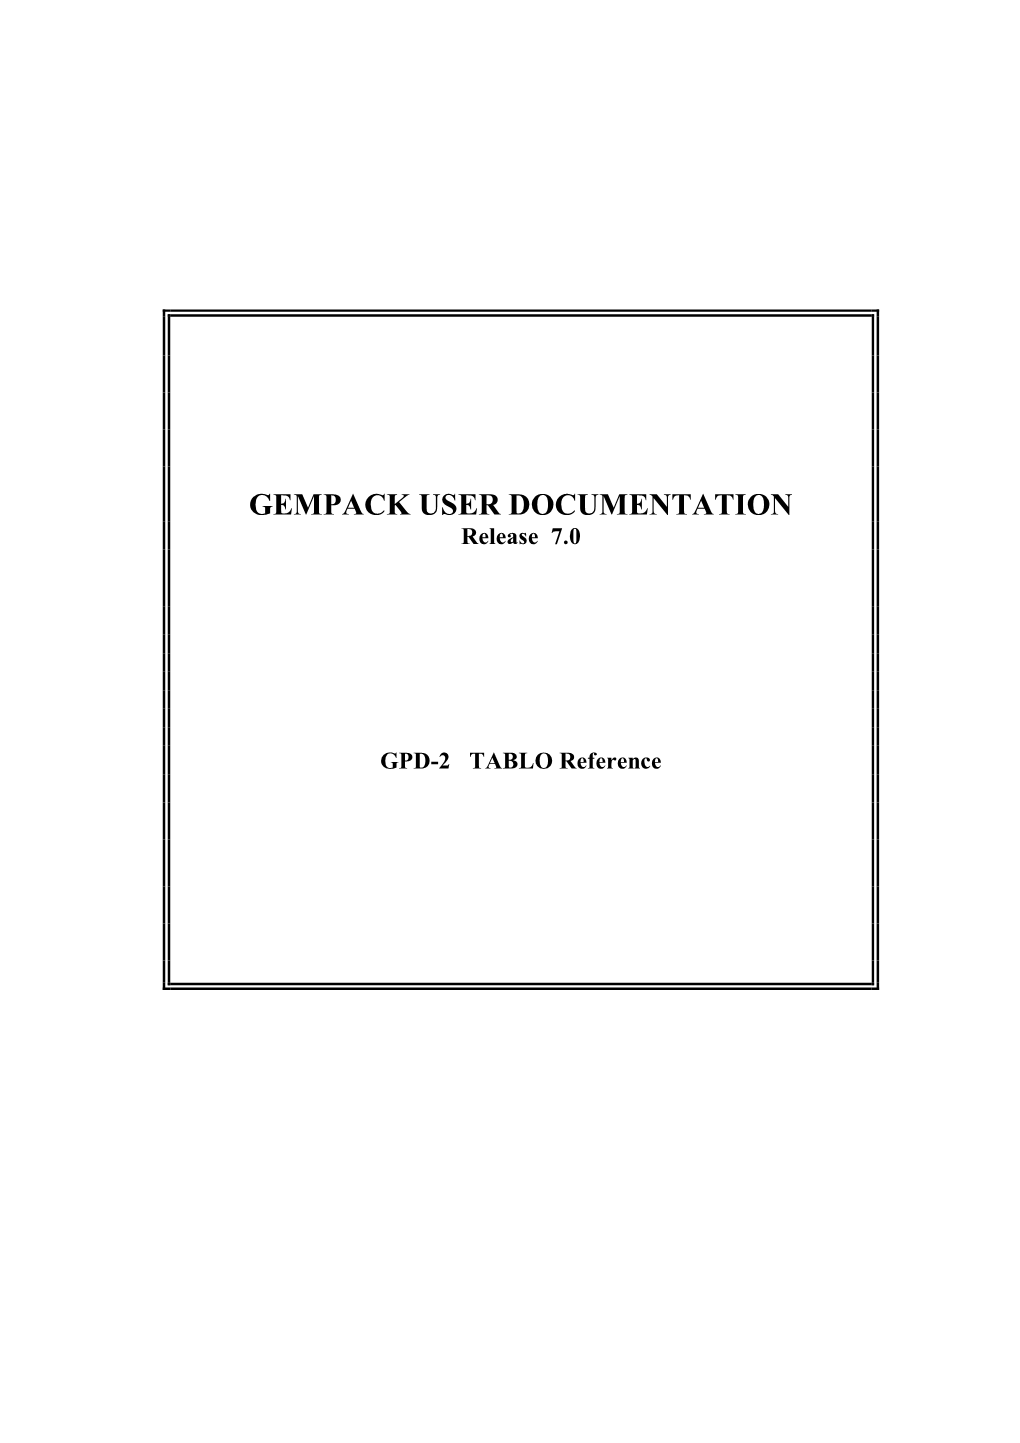 GEMPACK USER DOCUMENTATION Release 7.0